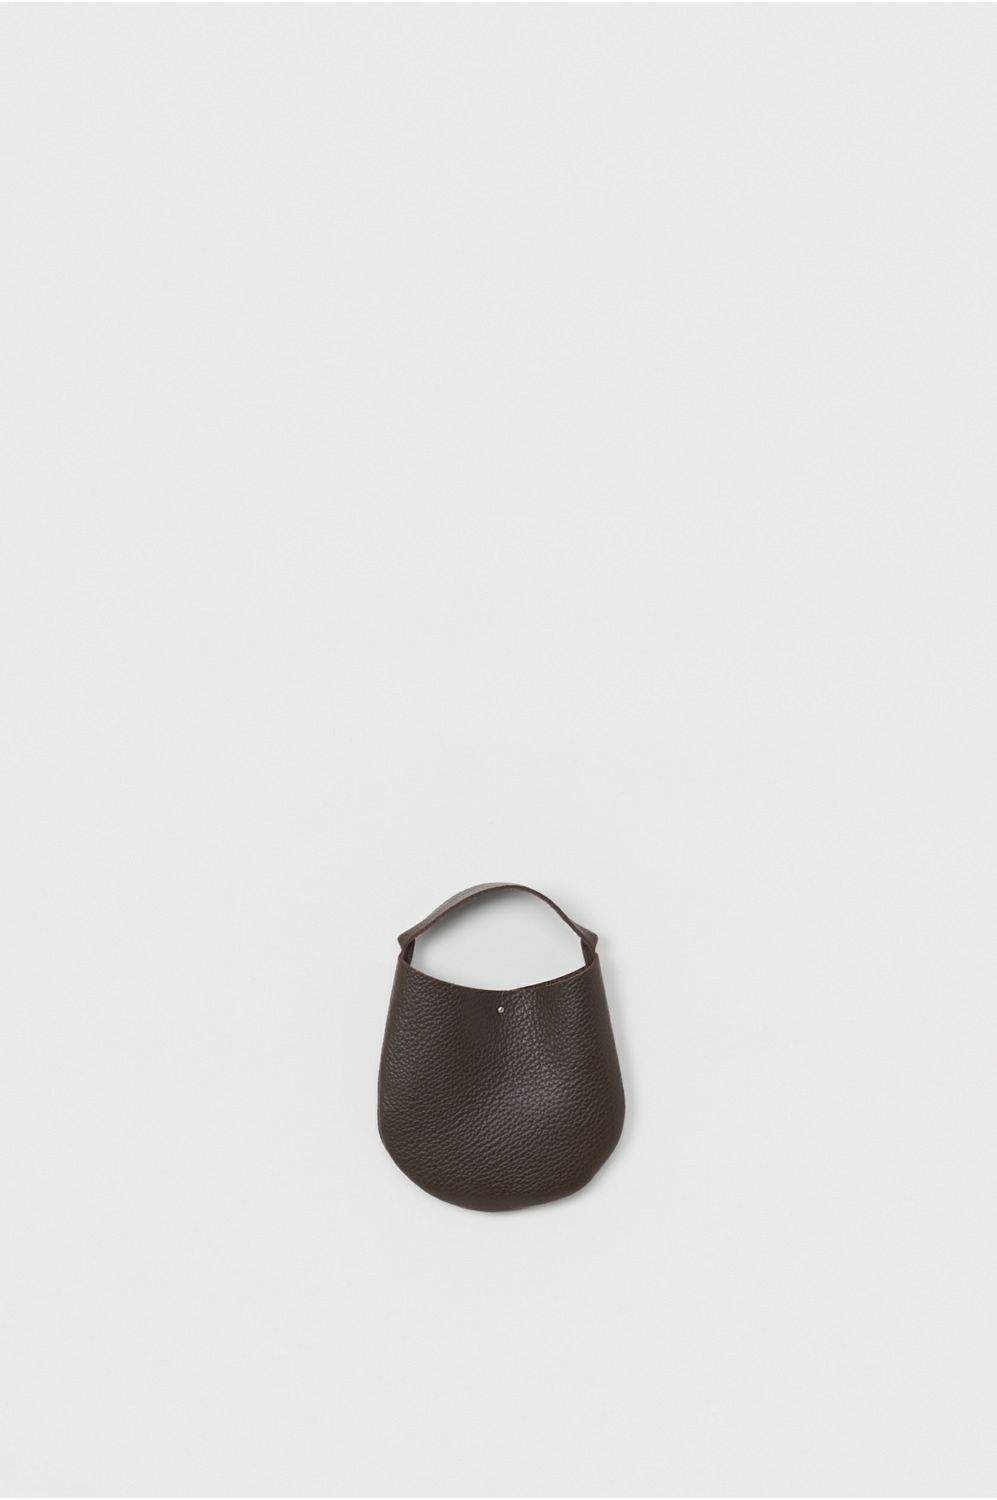 one piece bag small 詳細画像 dark brown 1